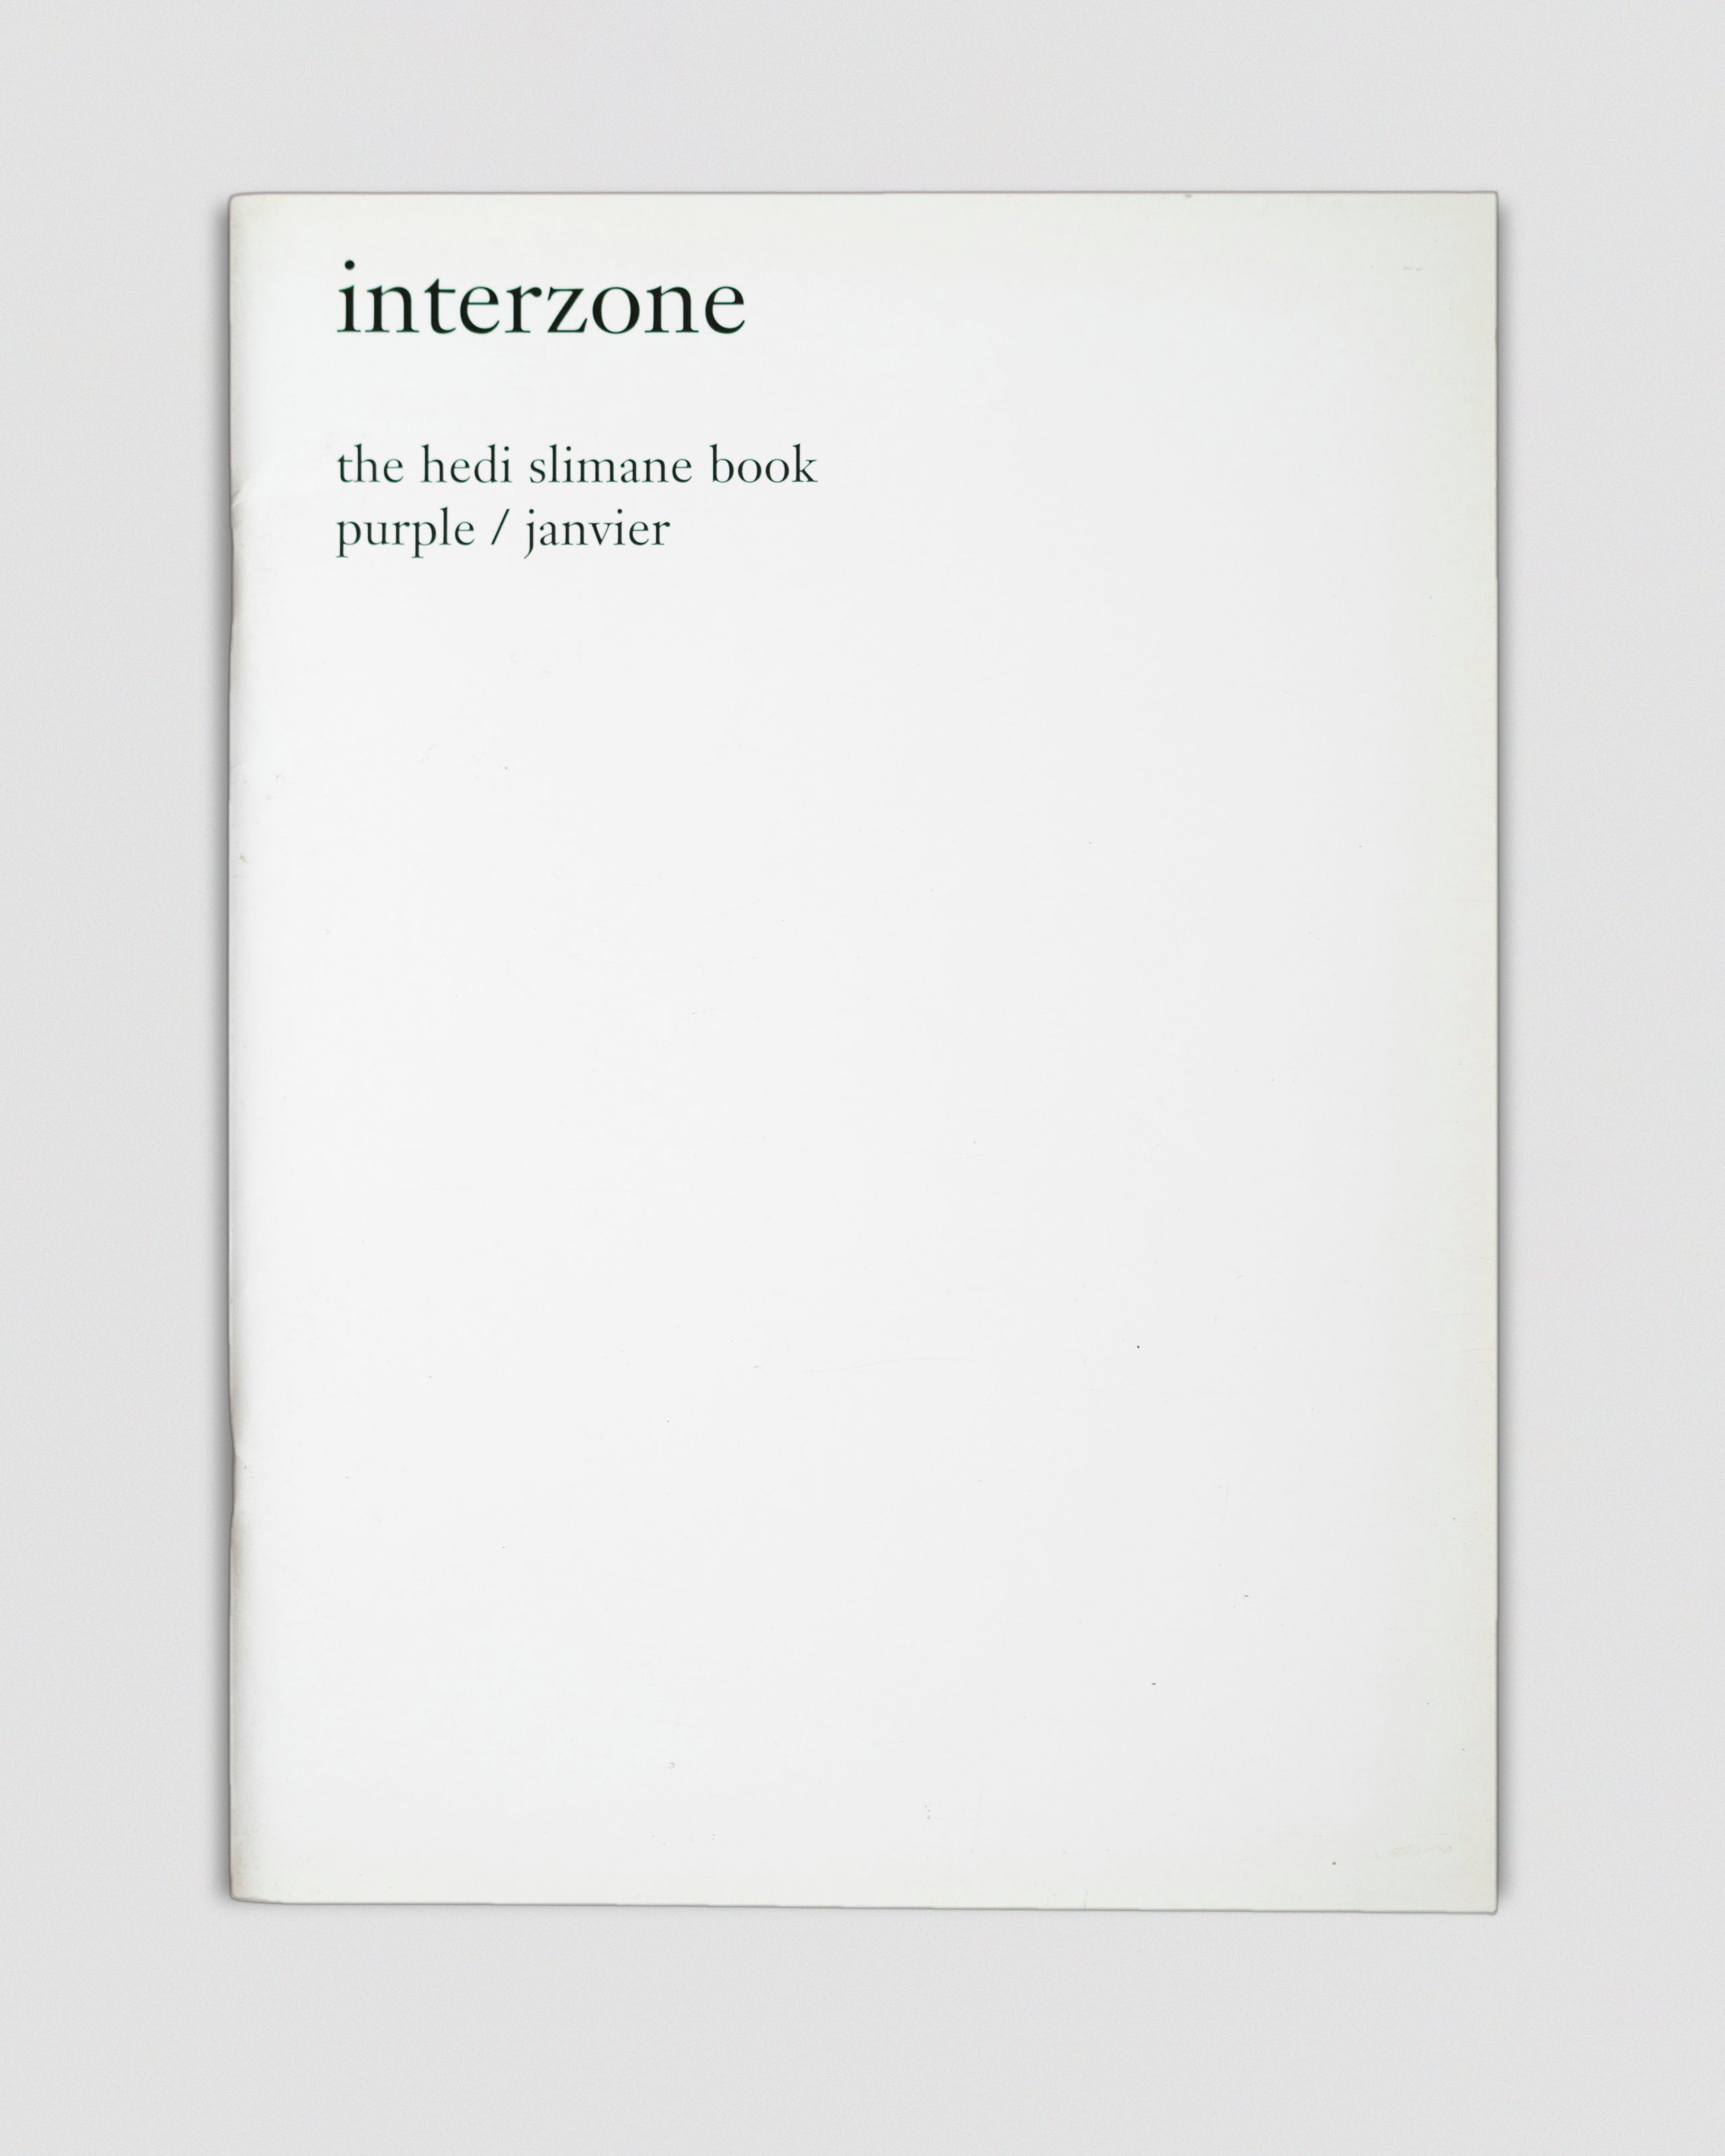 Interzone: The Hedi Slimane Book